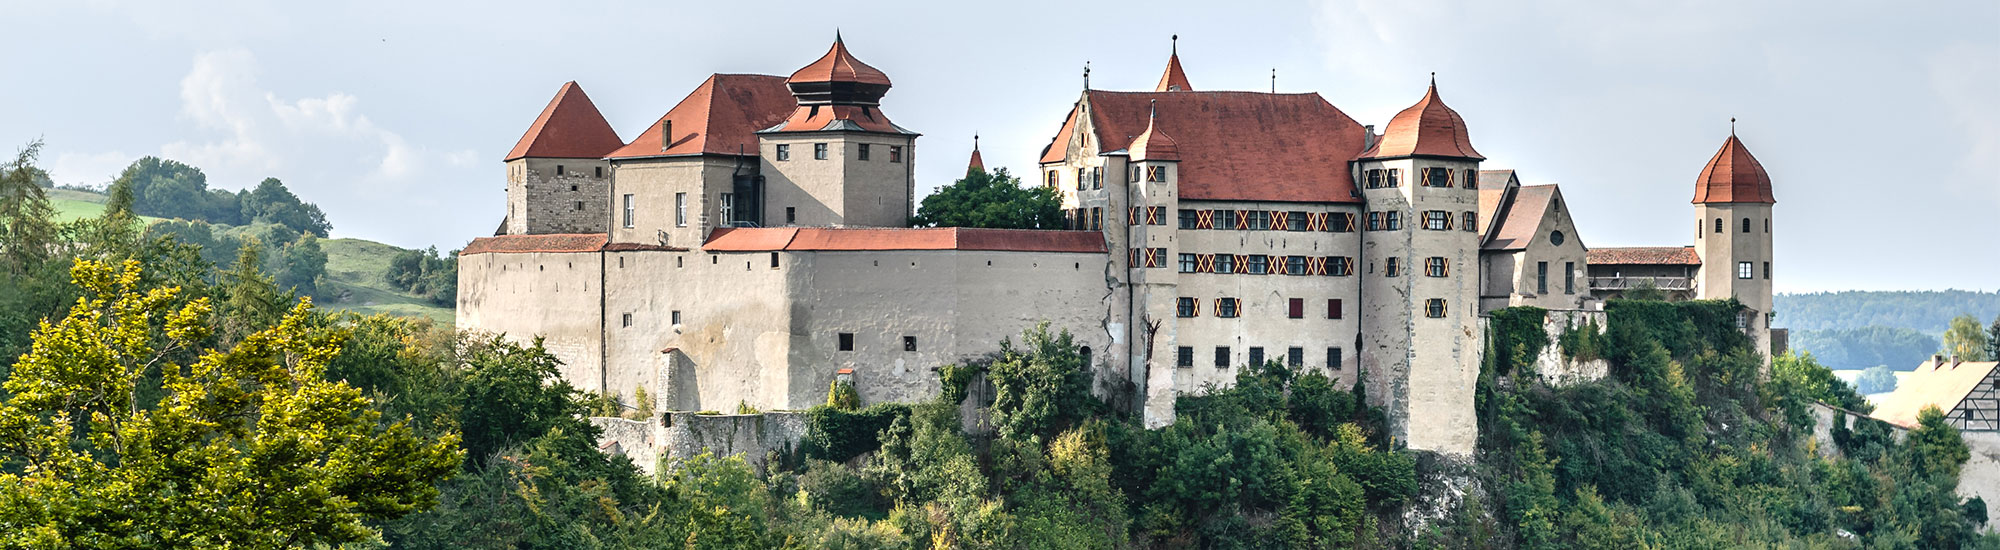 Schloss-Harburg_Schoene-Aussicht